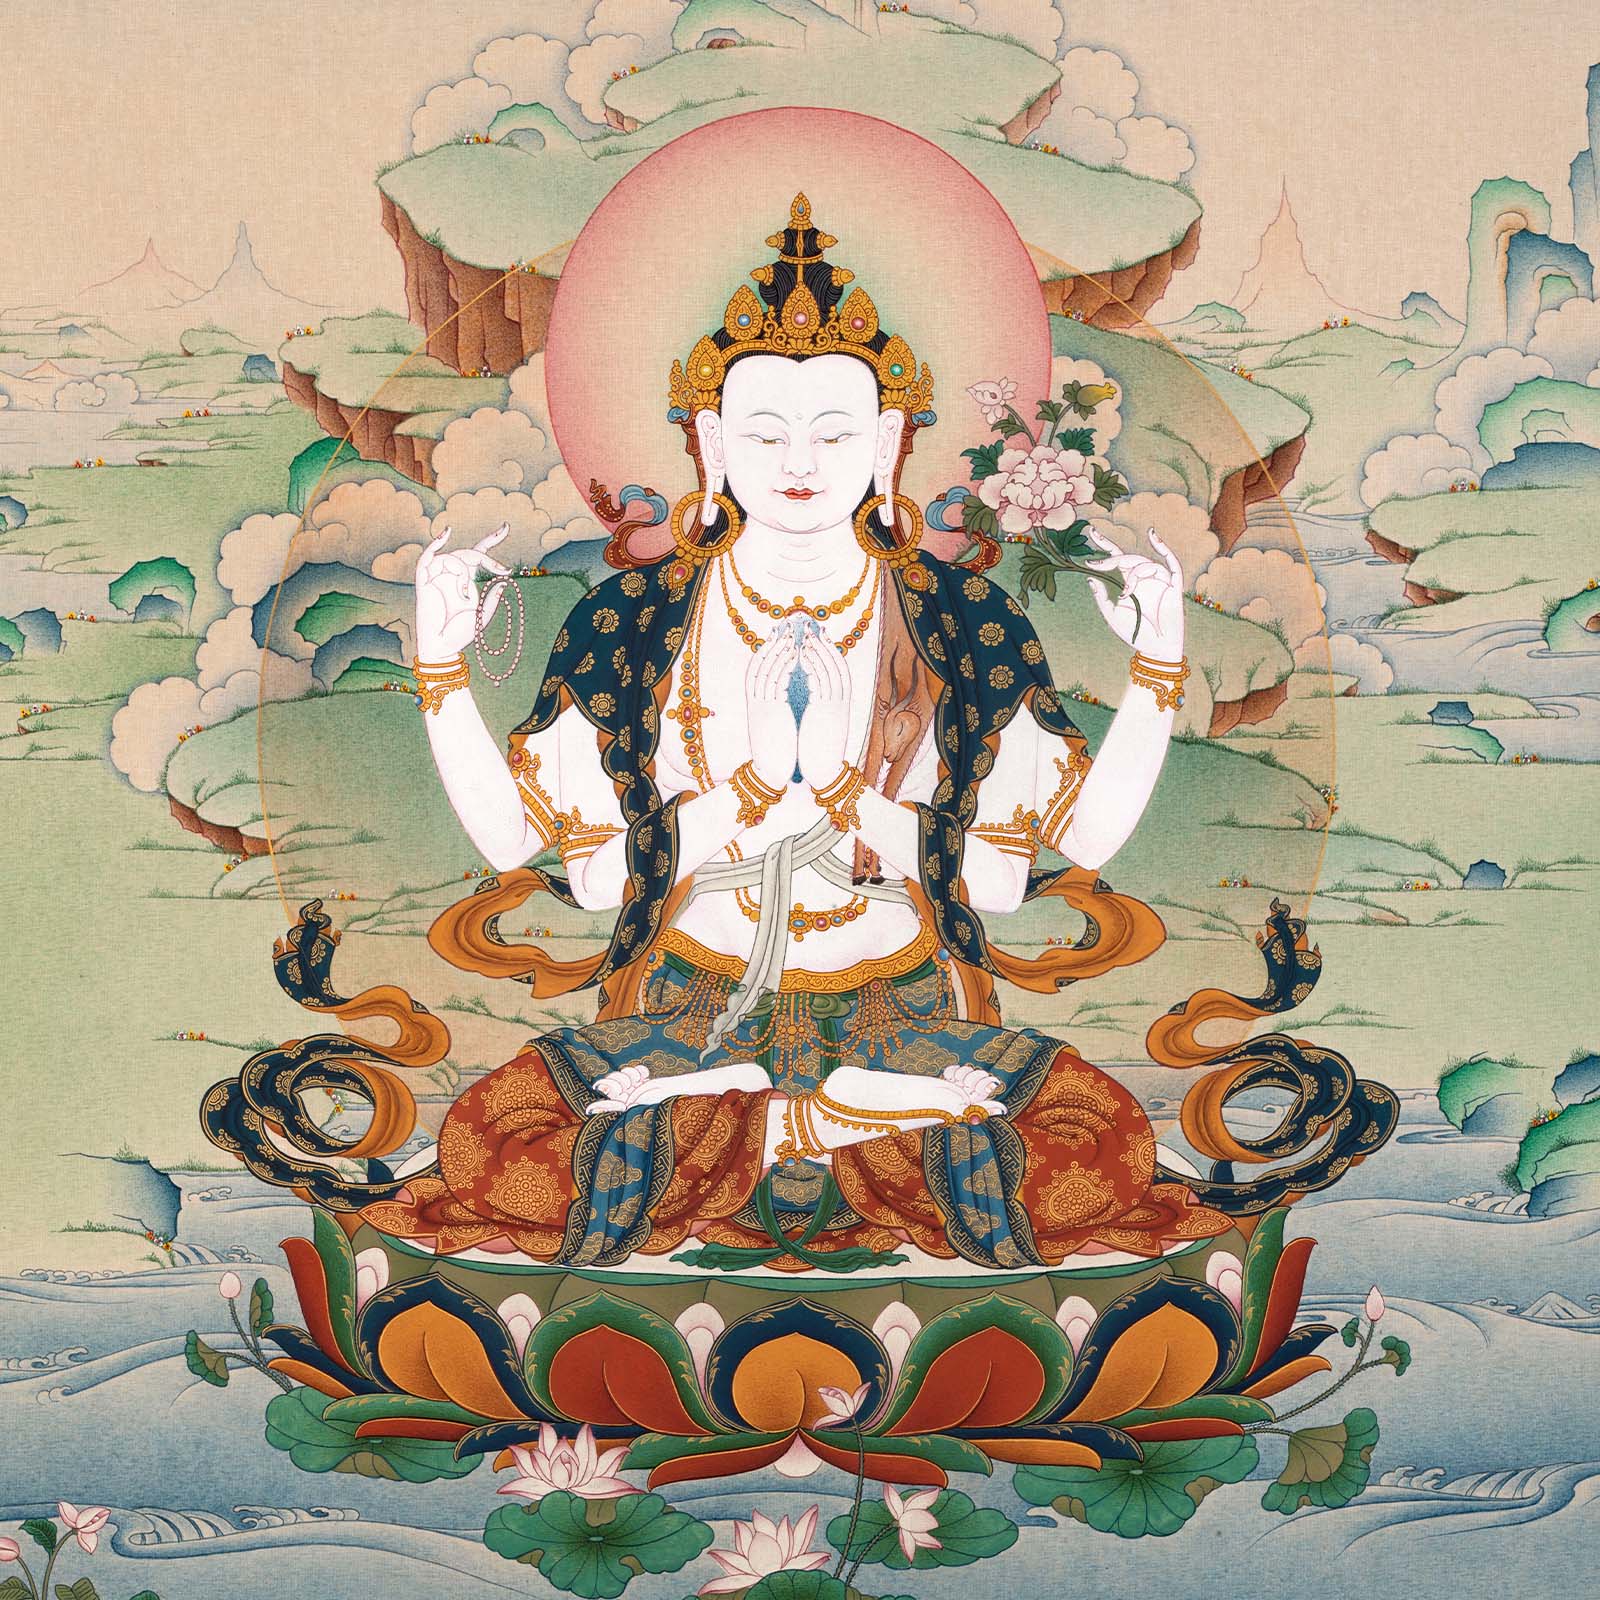 Who is Avalokiteshvara?